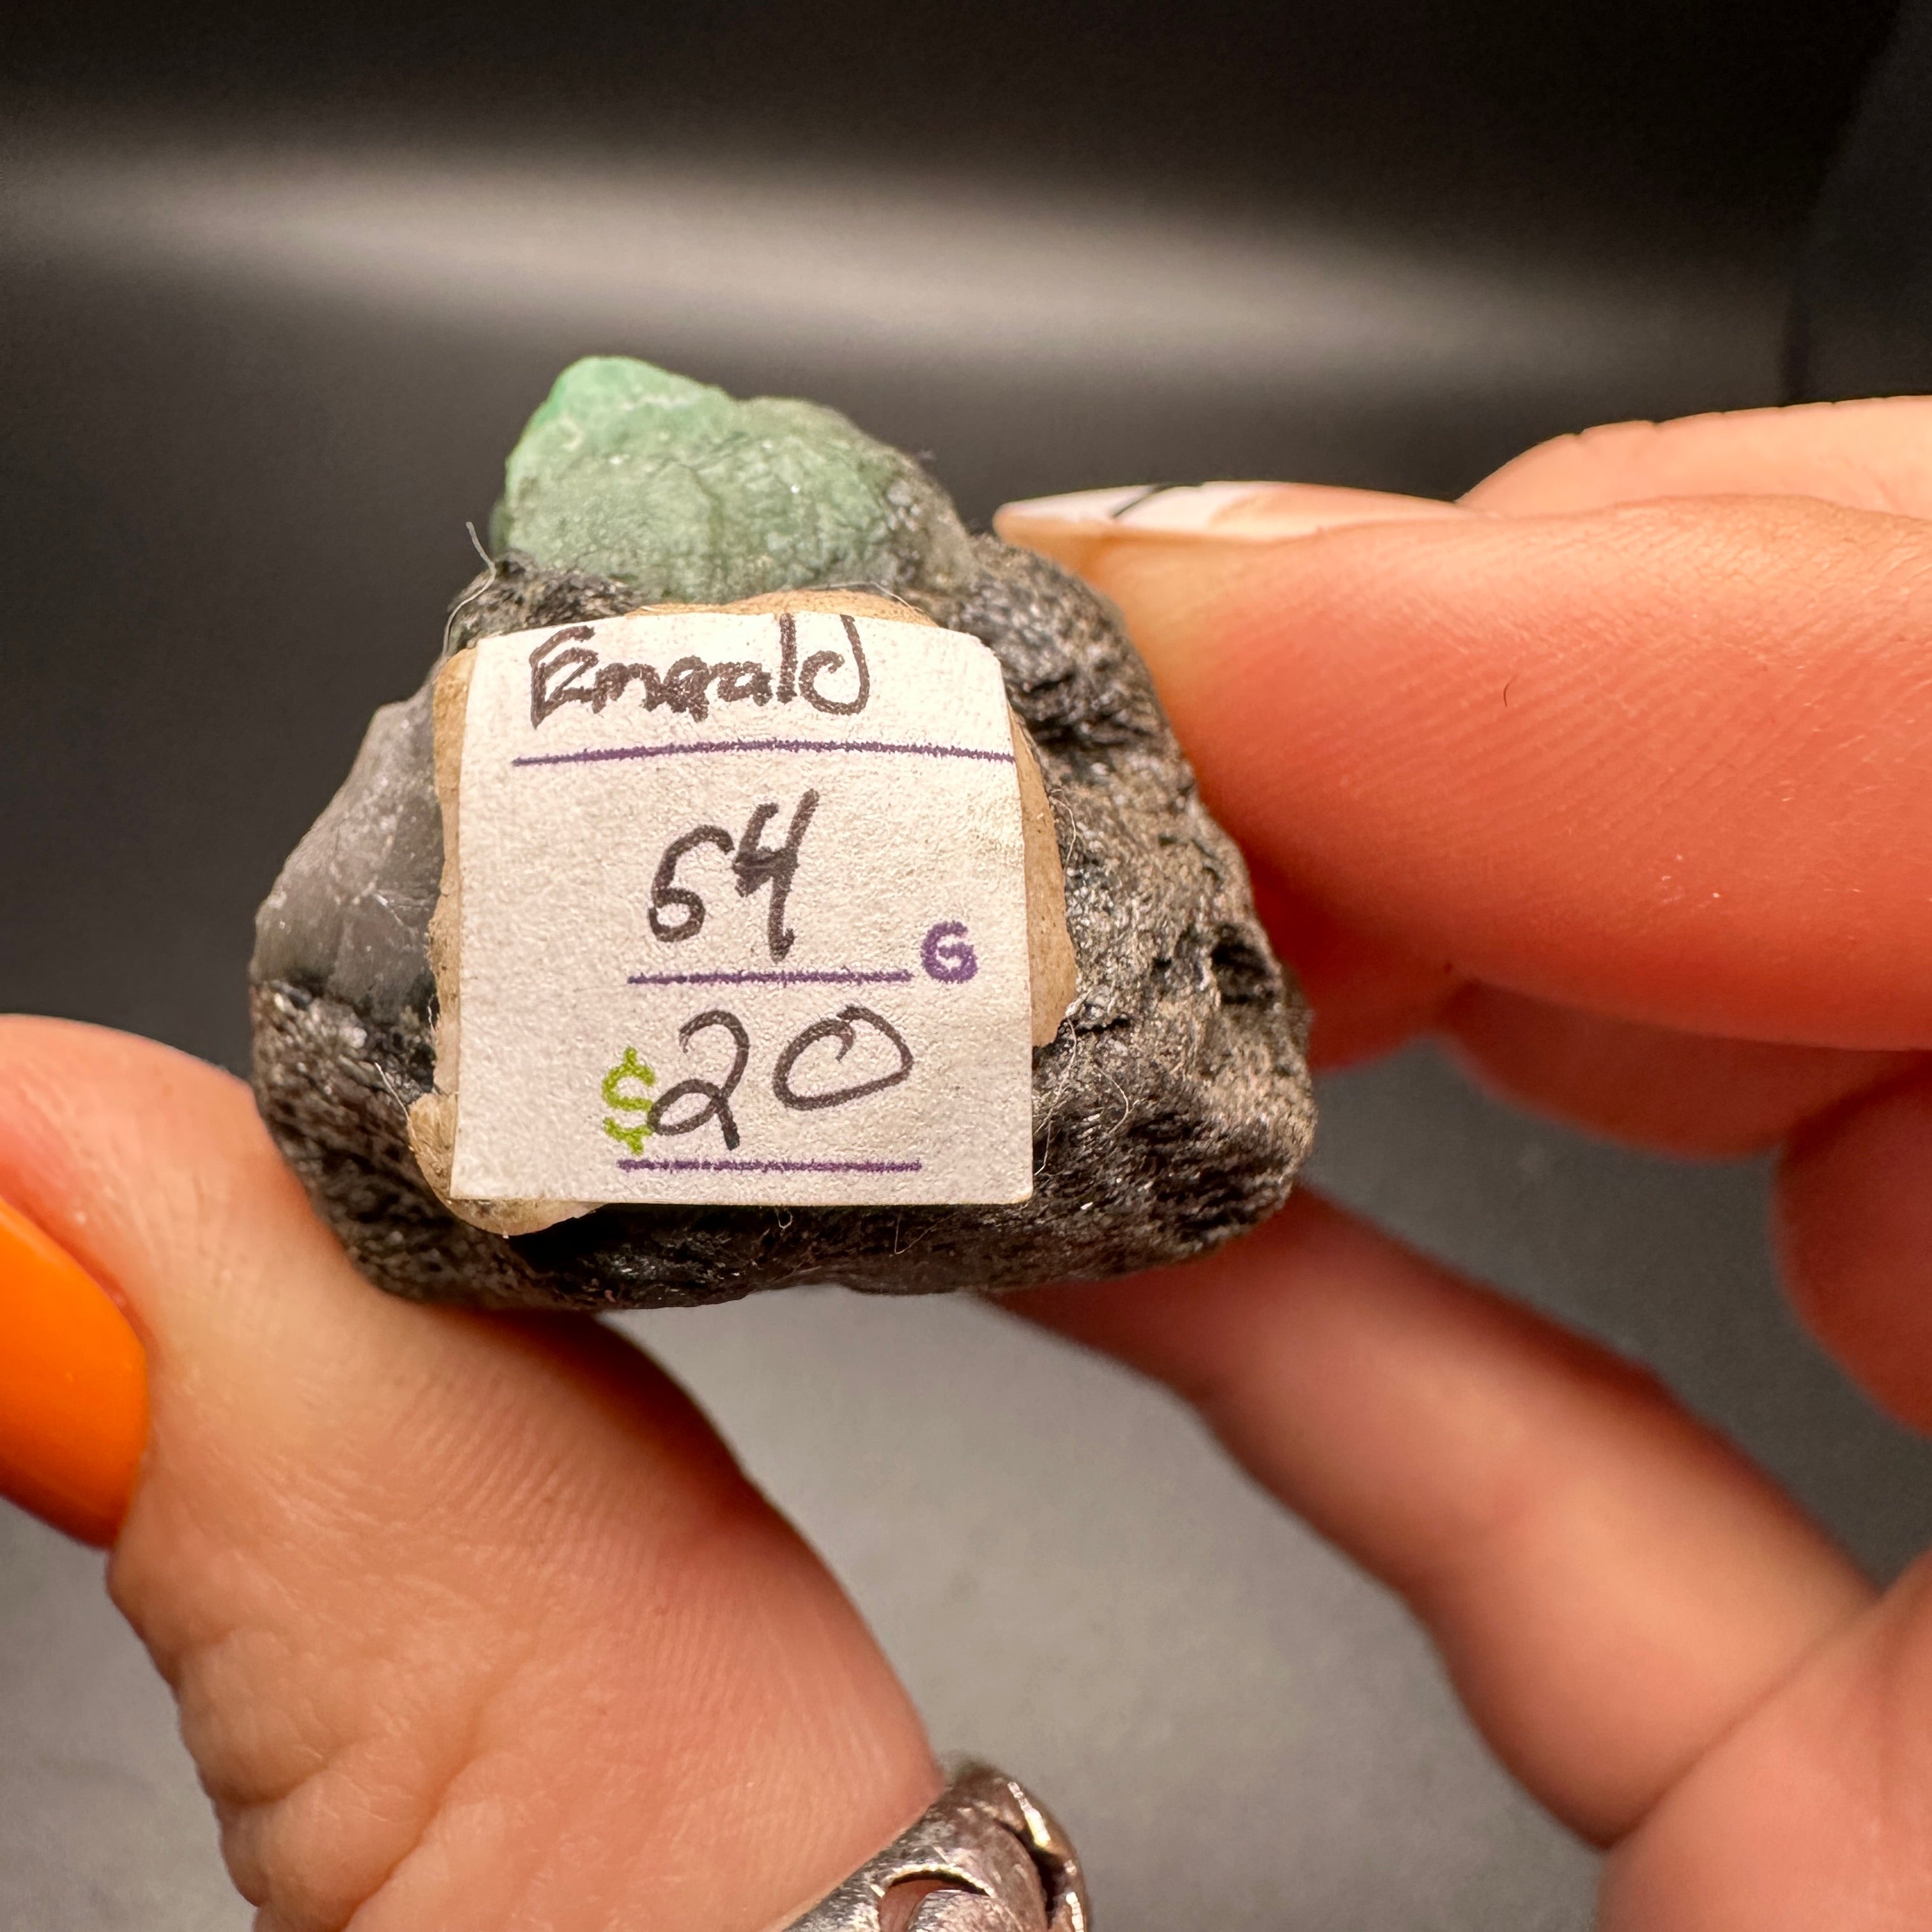 Emerald in Matrix Mineral Specimen